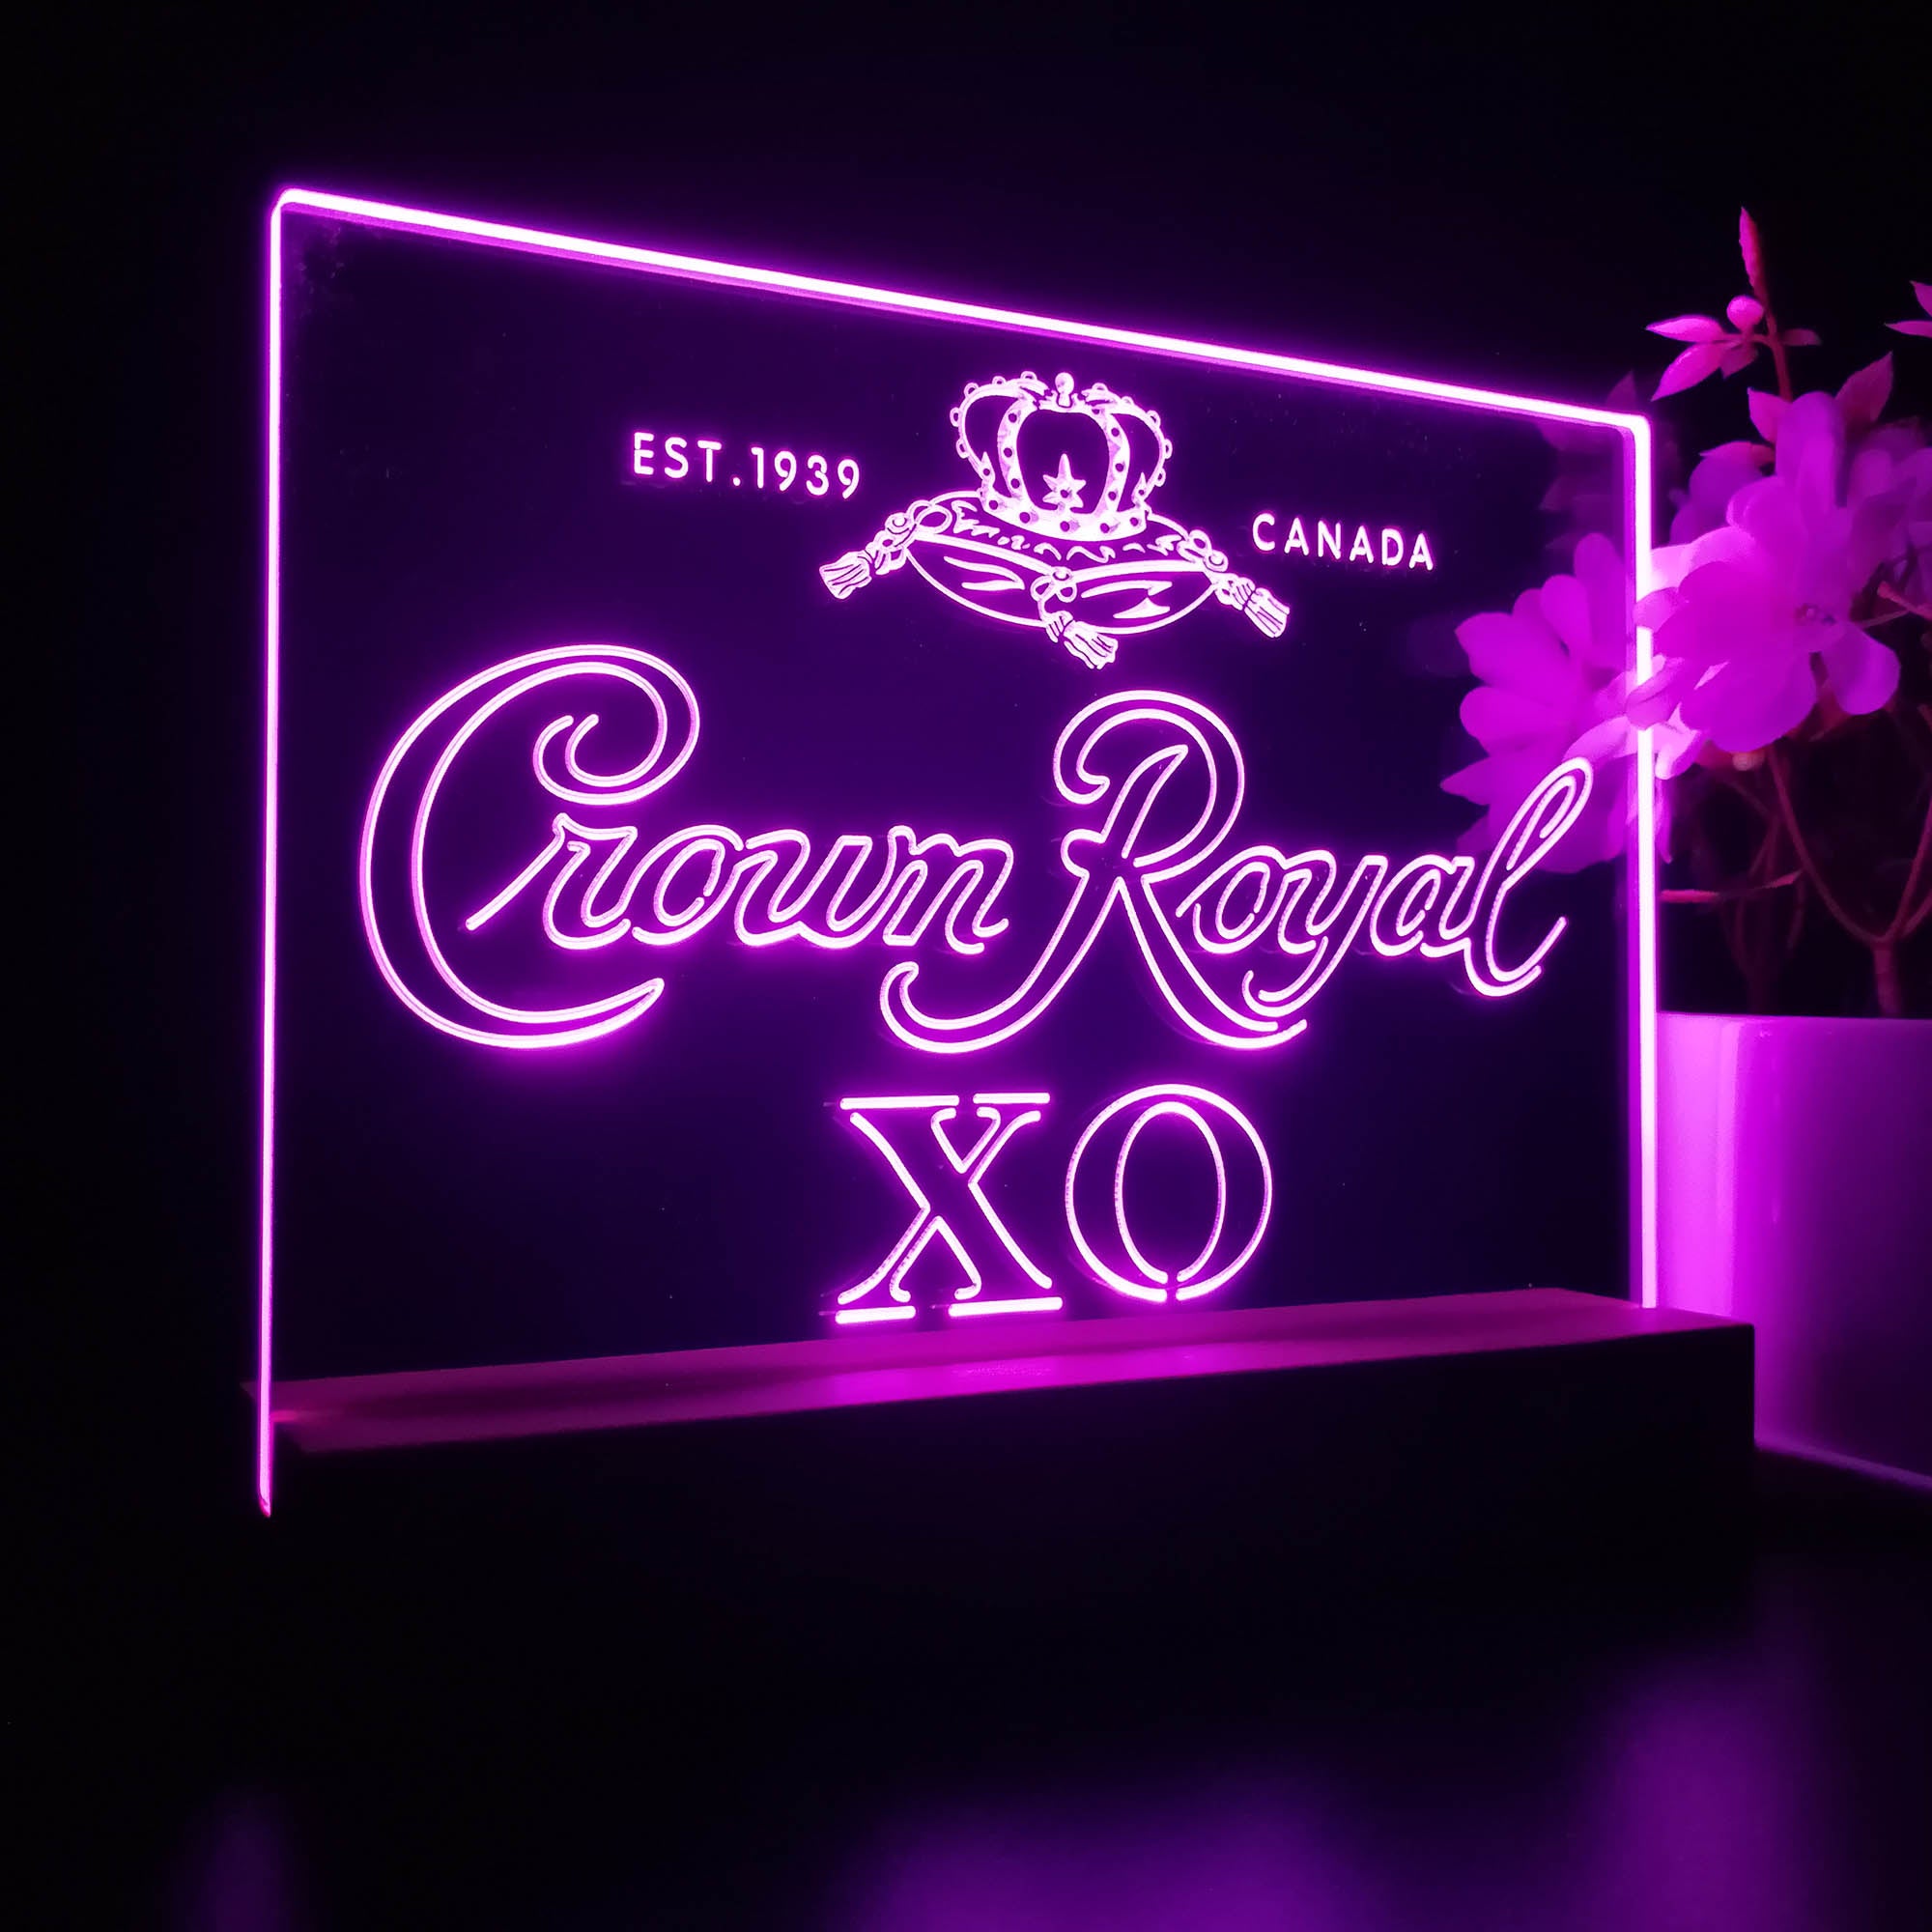 Crown Royal XO Night Light LED Sign